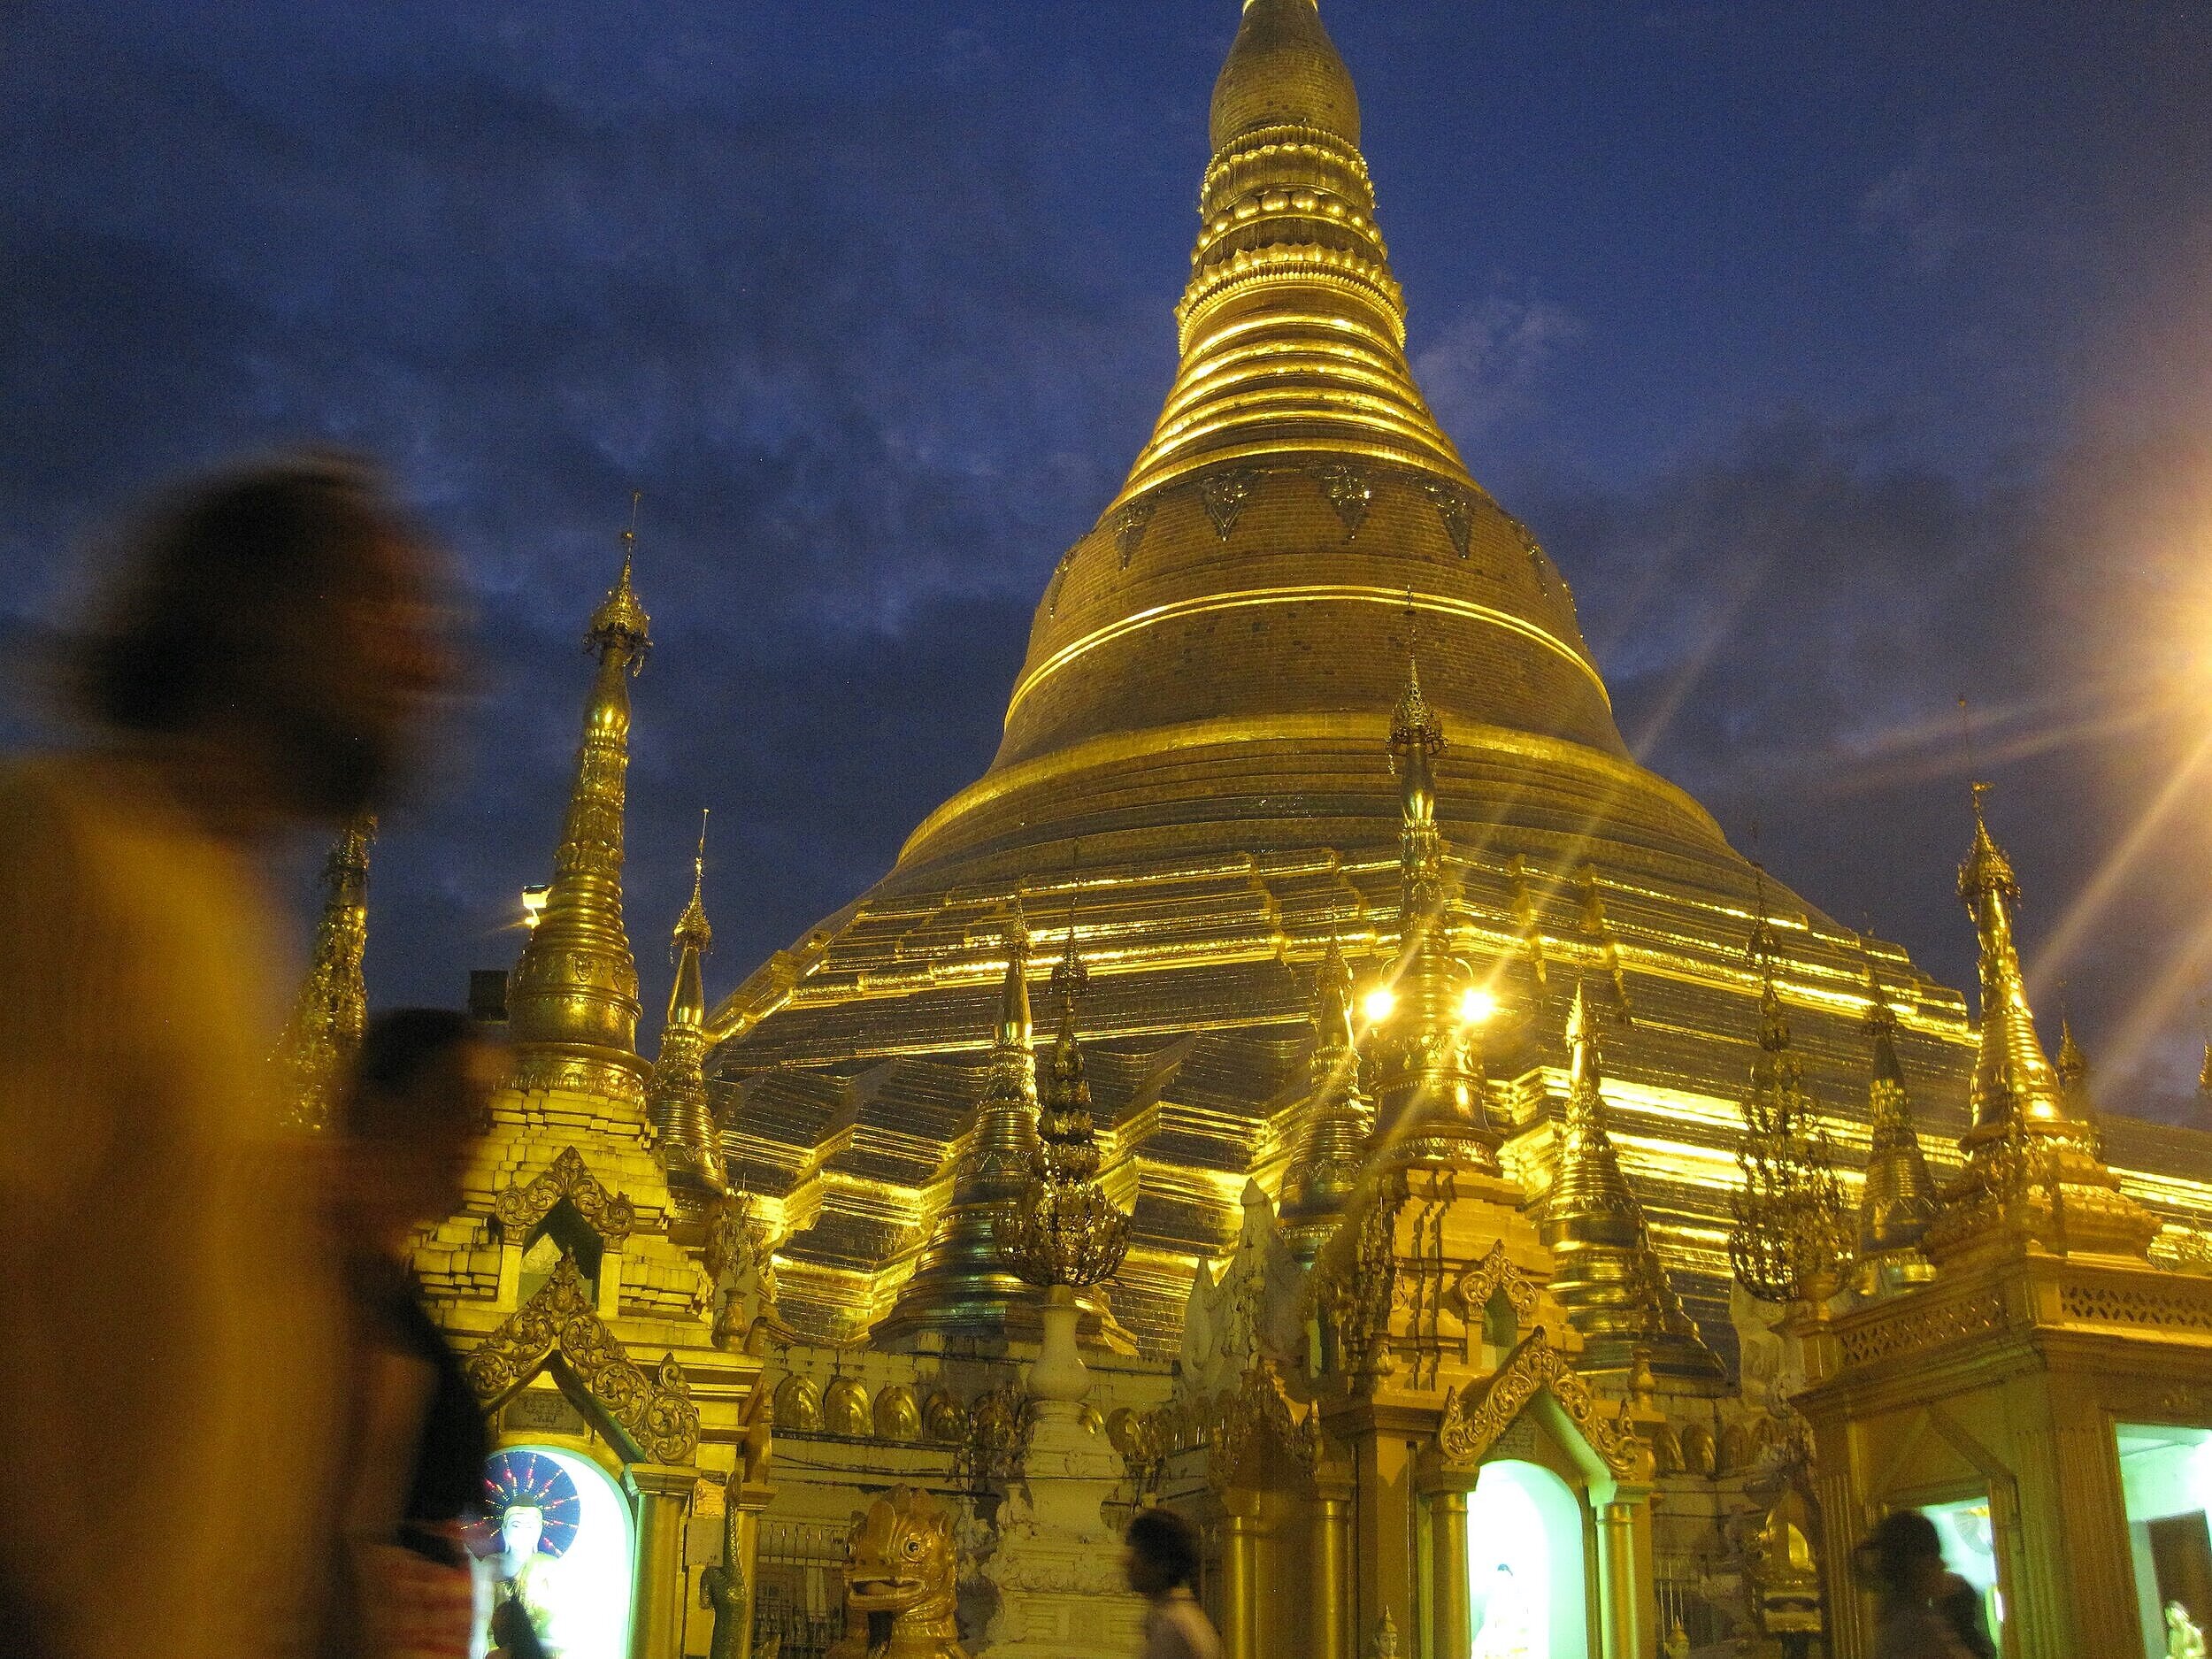 The Shwedagon Pagoda glowing at night